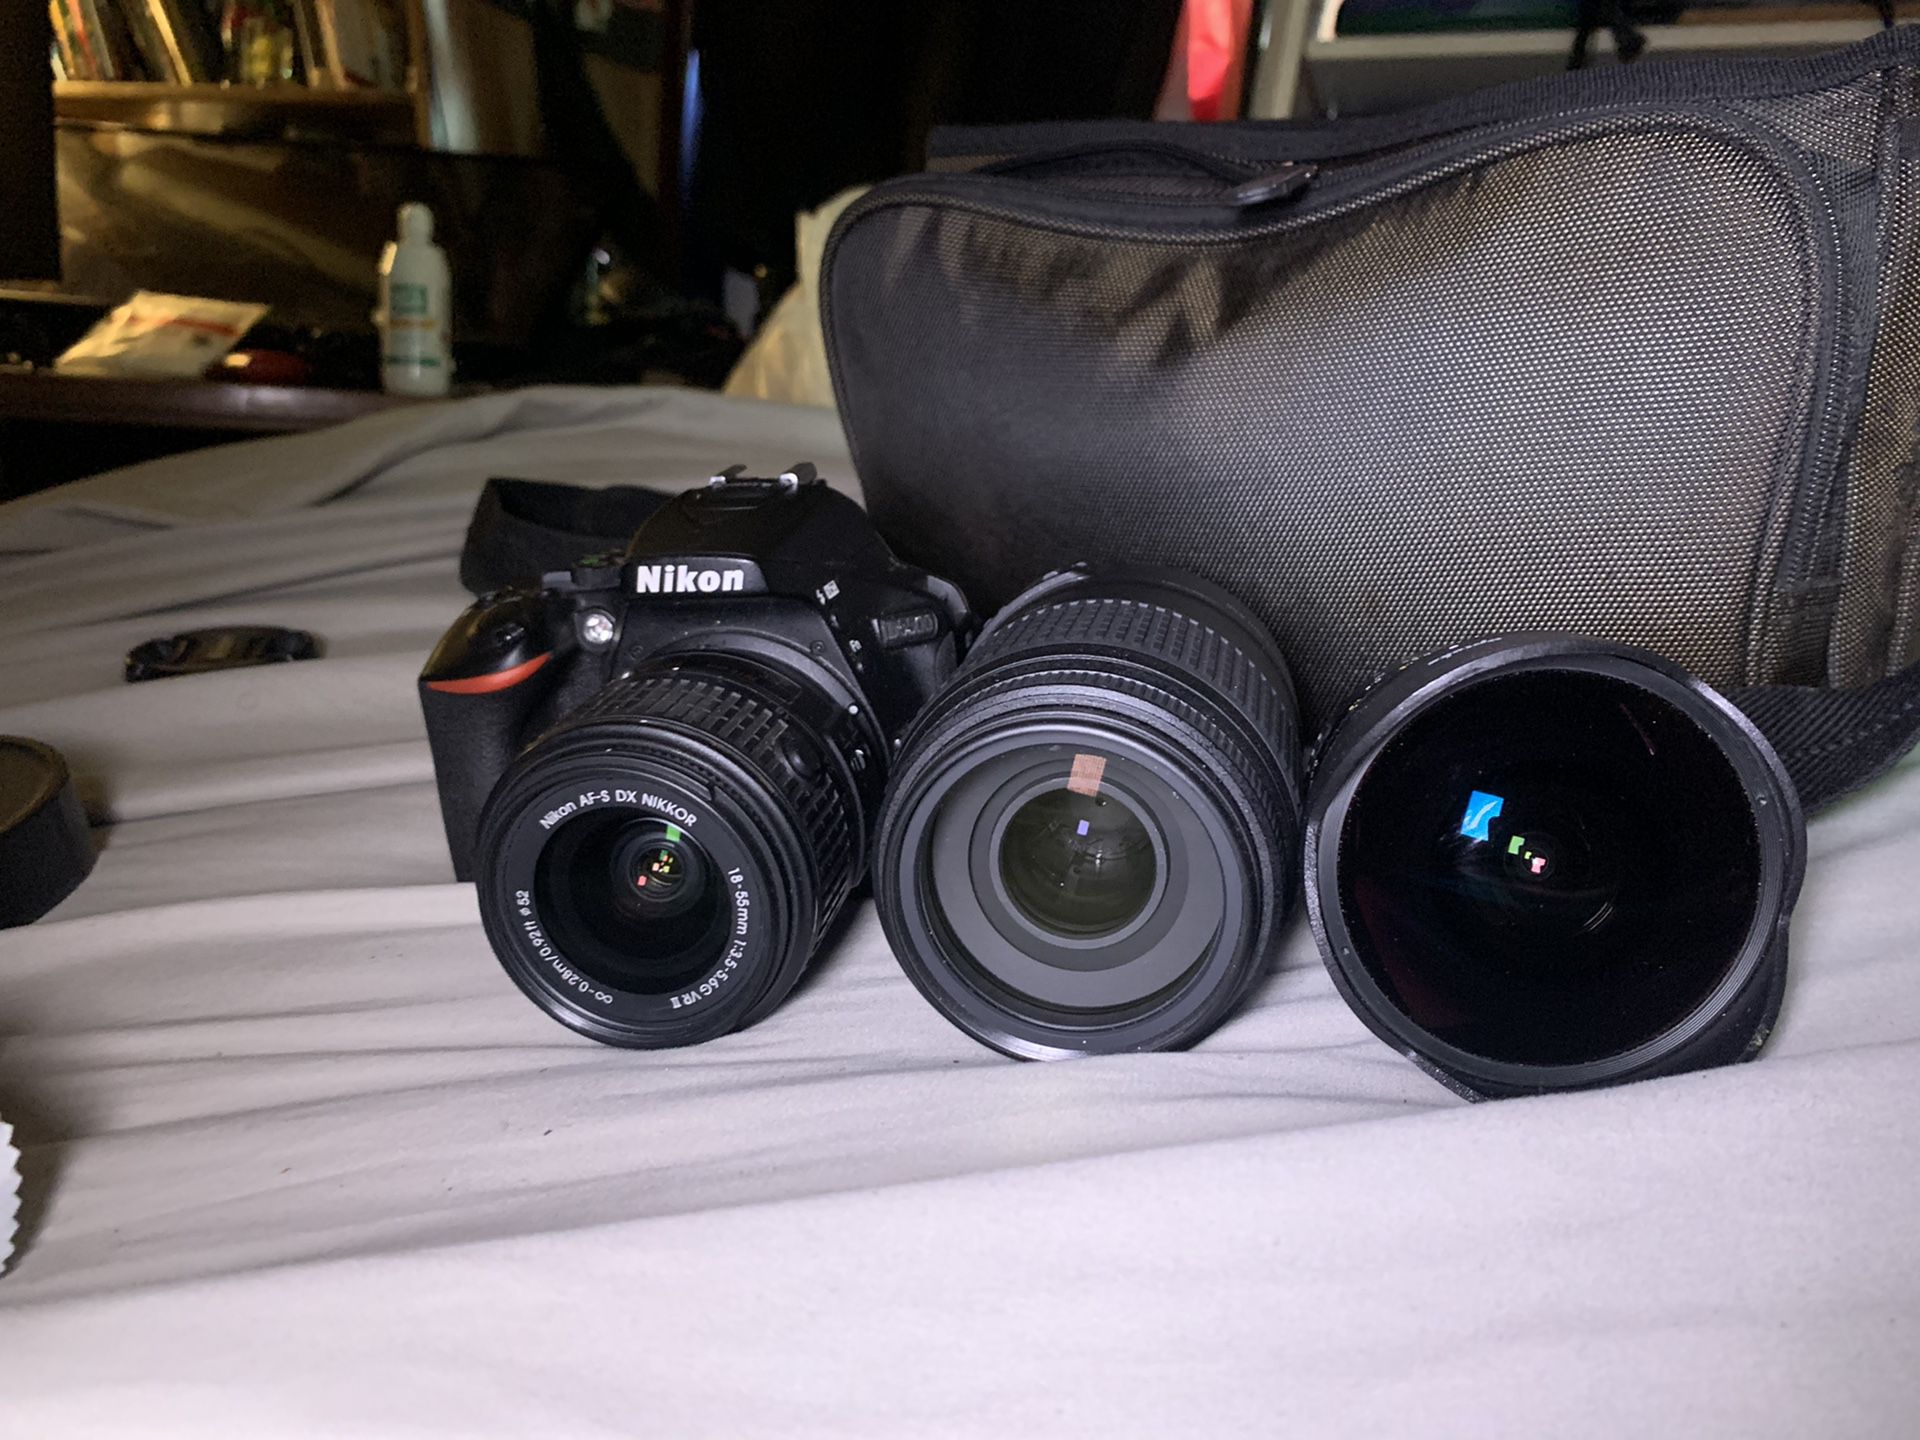 Nikon D5500 DSLR camera with 2 extra lenses